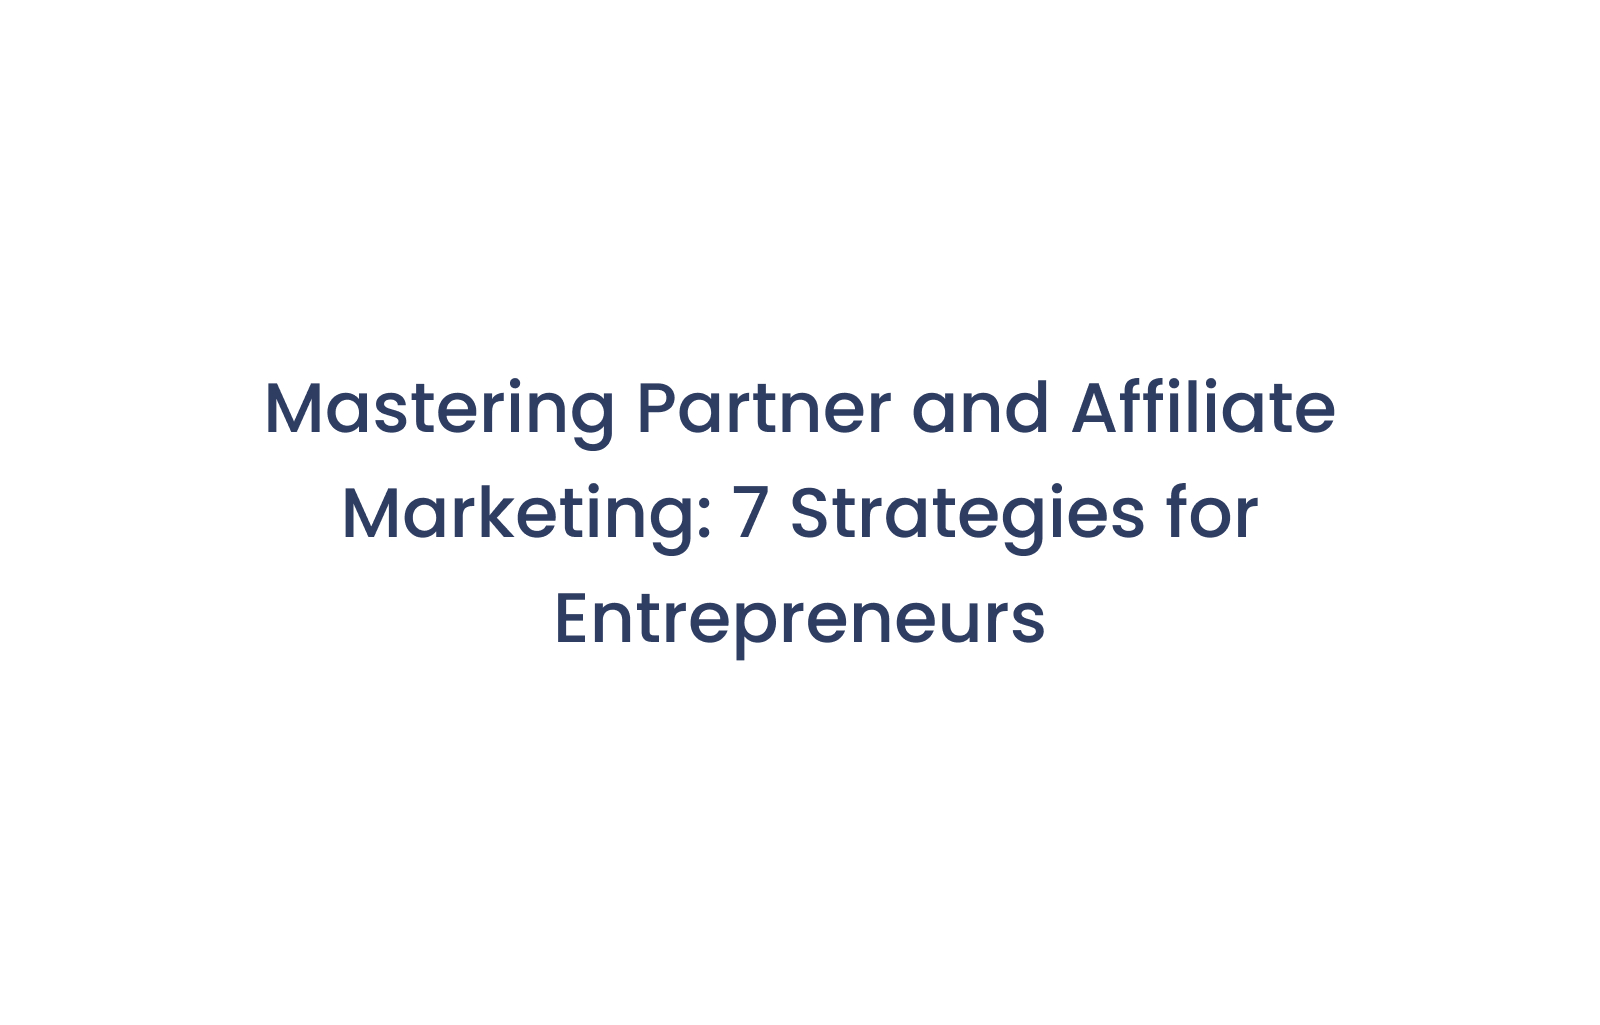 Mastering Partner and Affiliate Marketing: 7 Strategies for Entrepreneurs